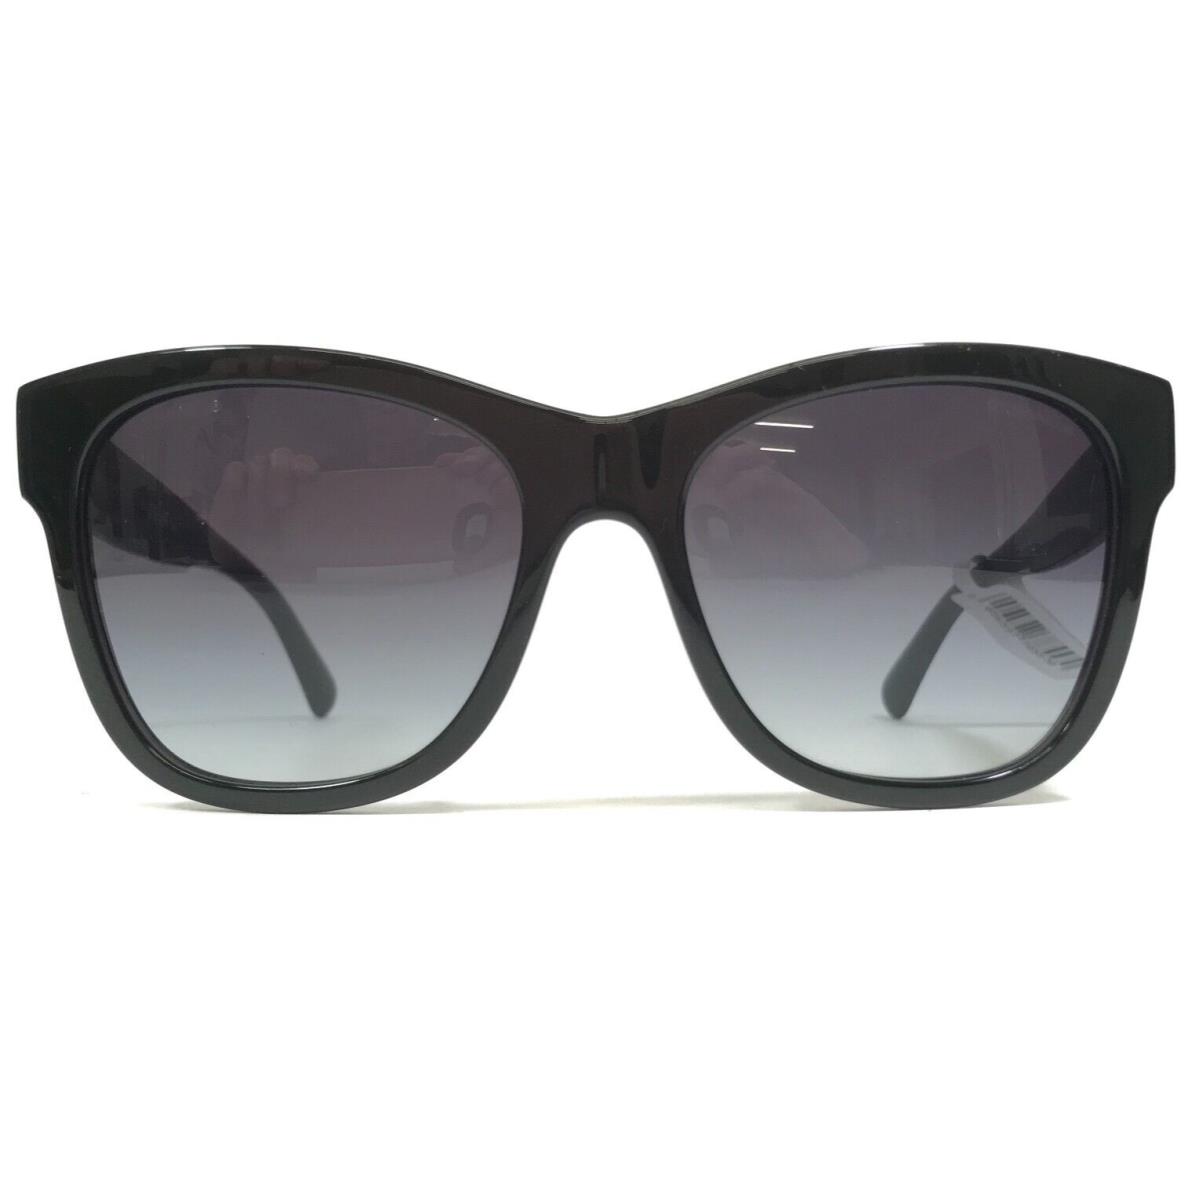 Chanel Sunglasses 5380-A c.1707/S6 Shiny Black Cat Eye Frames with Purple Lenses